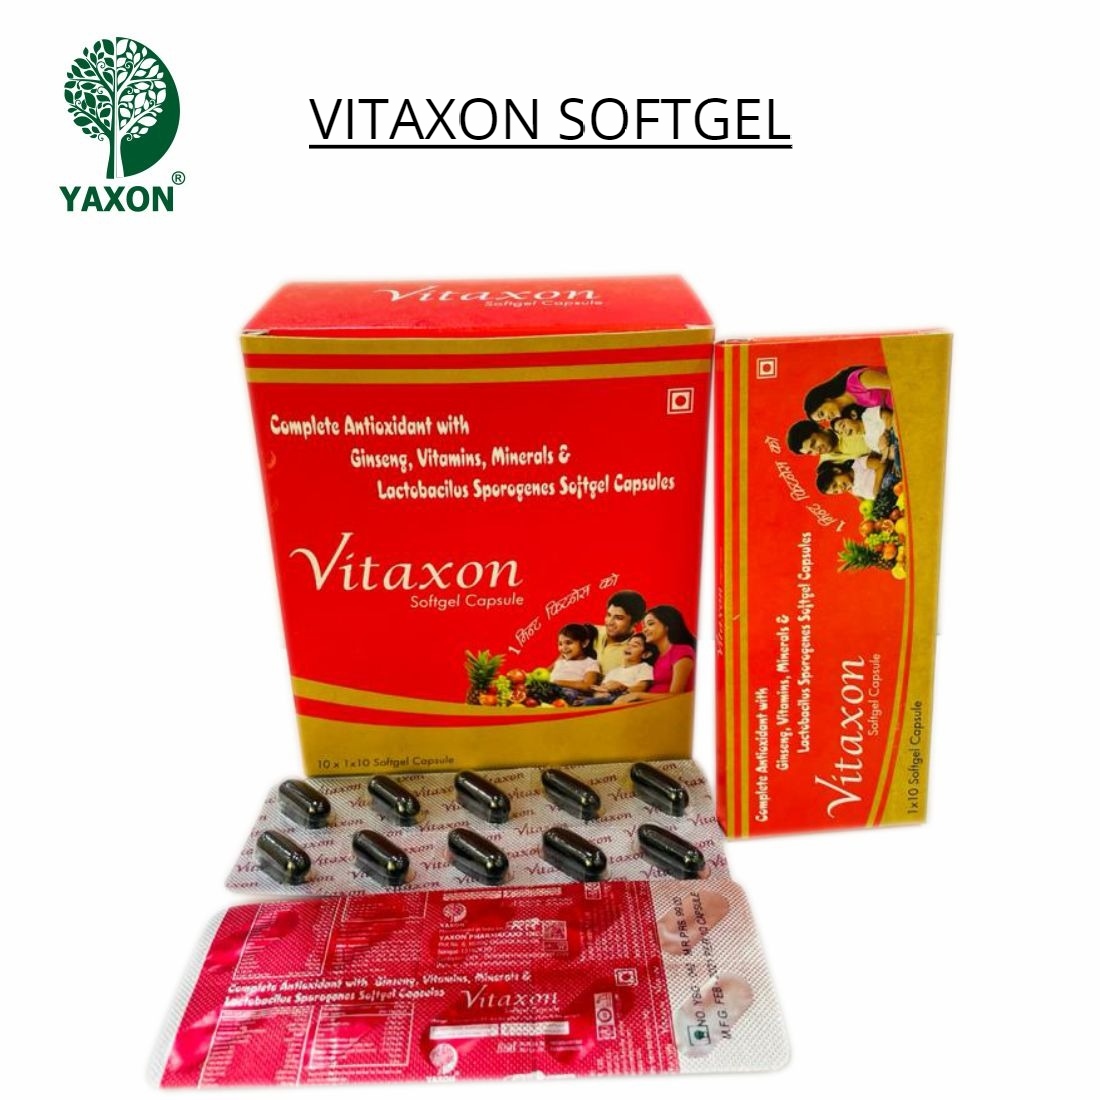 YAXON VITAXON Softgel Capsules